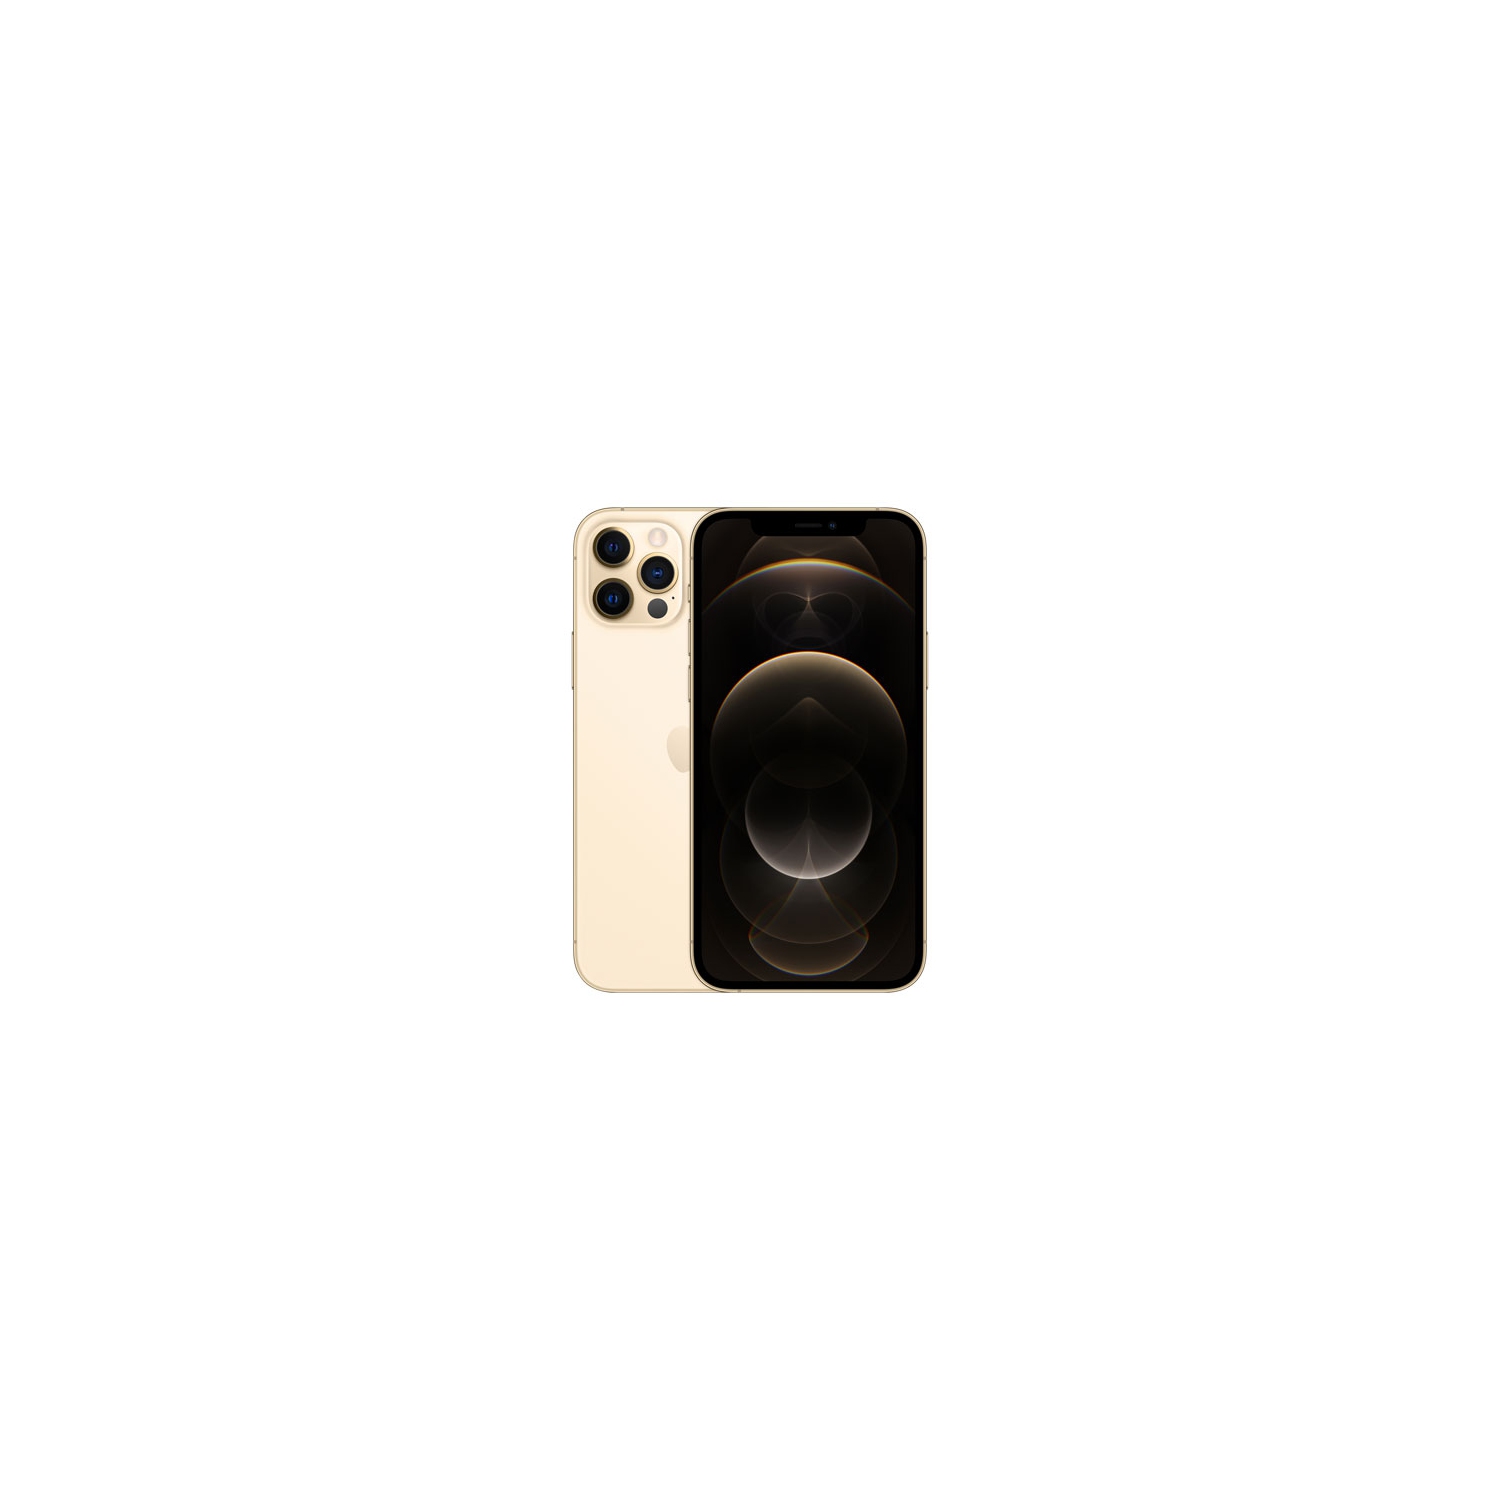 Apple iPhone 12 Pro 256GB Smartphone - Gold - Unlocked - Open Box